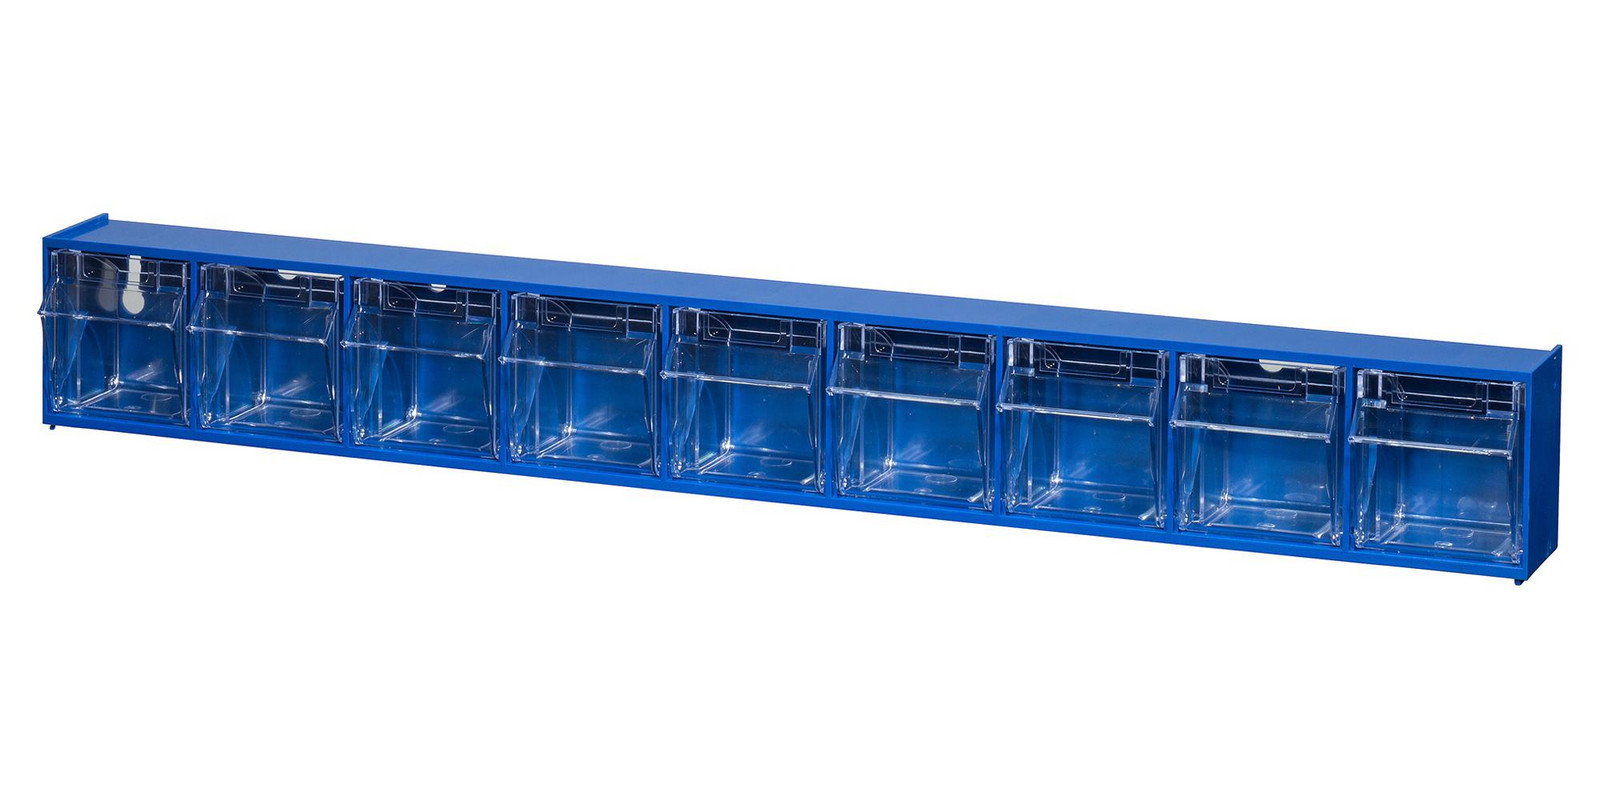 Allit 464450 Bin Cabinet, 600 X 65 X 77mm, Blue/clear